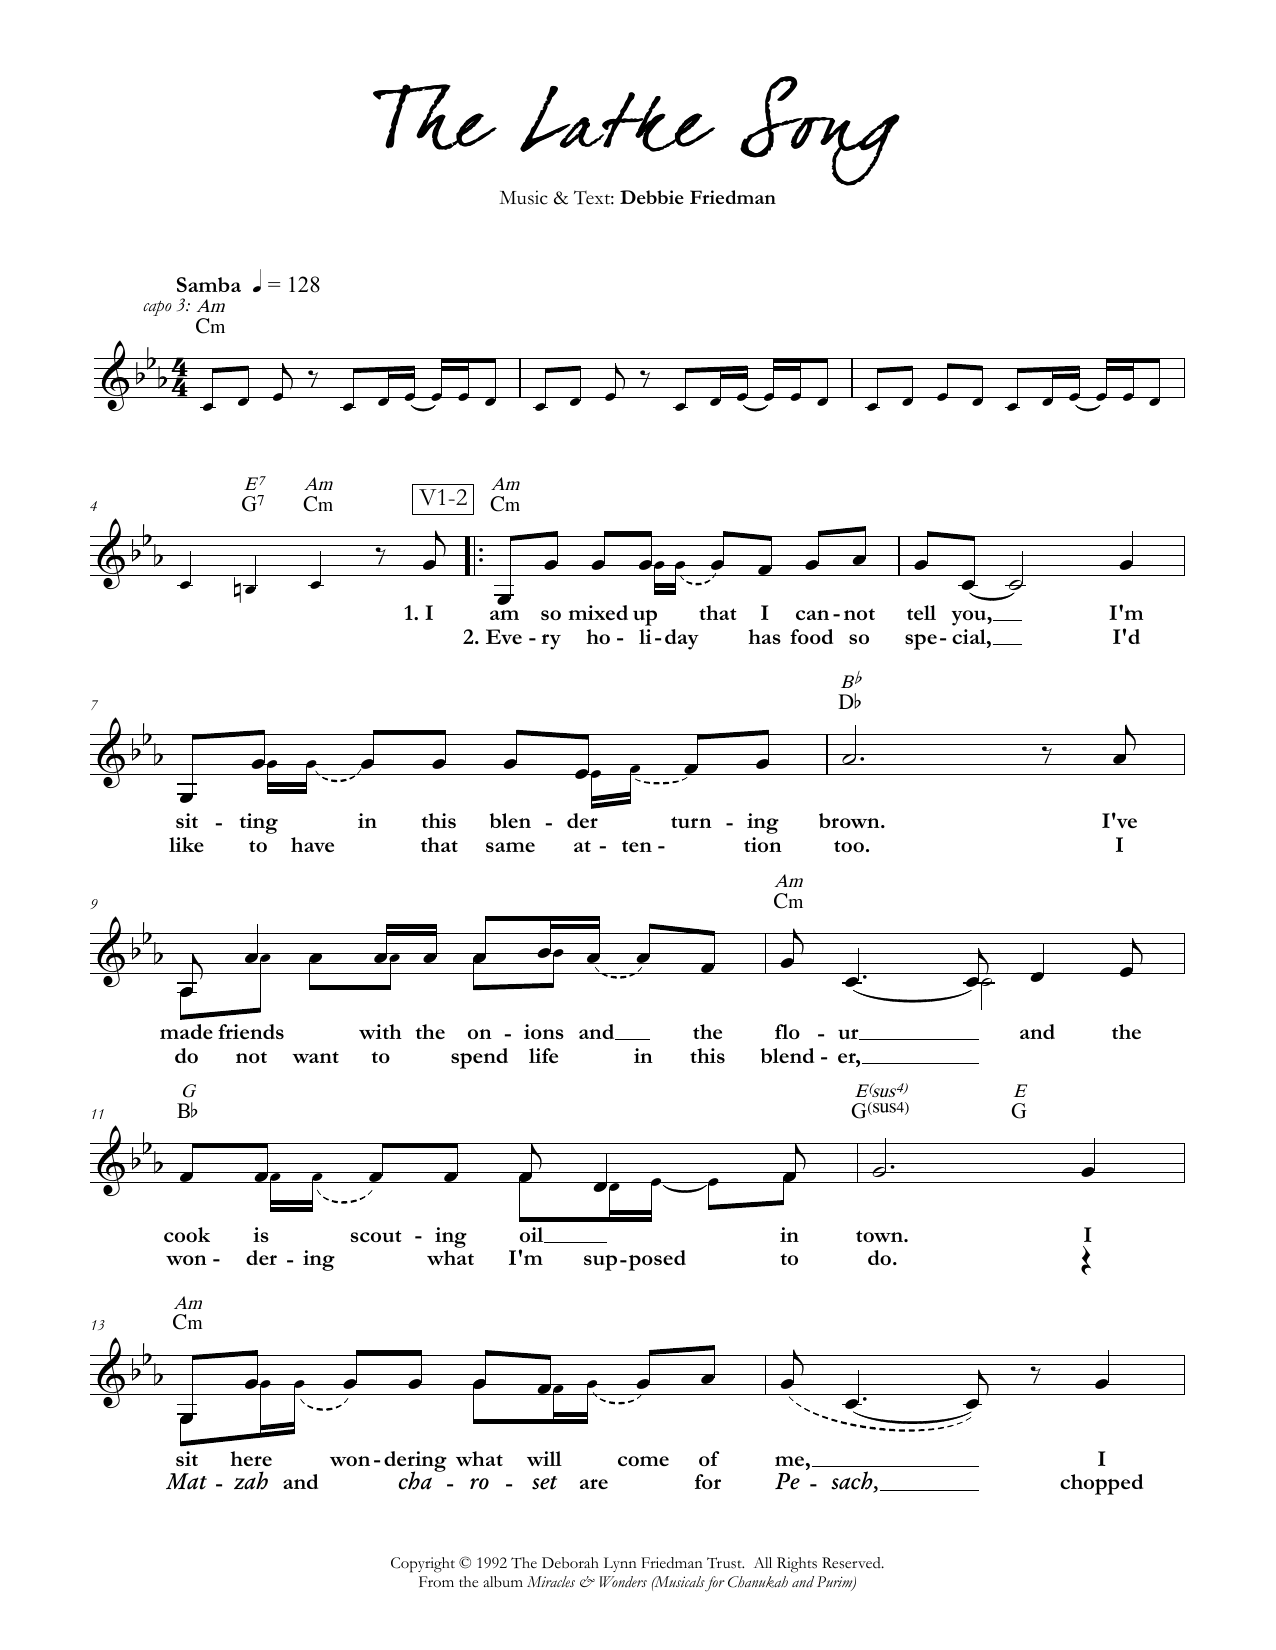 Debbie Friedman The Latke Song Sheet Music Notes & Chords for Lead Sheet / Fake Book - Download or Print PDF